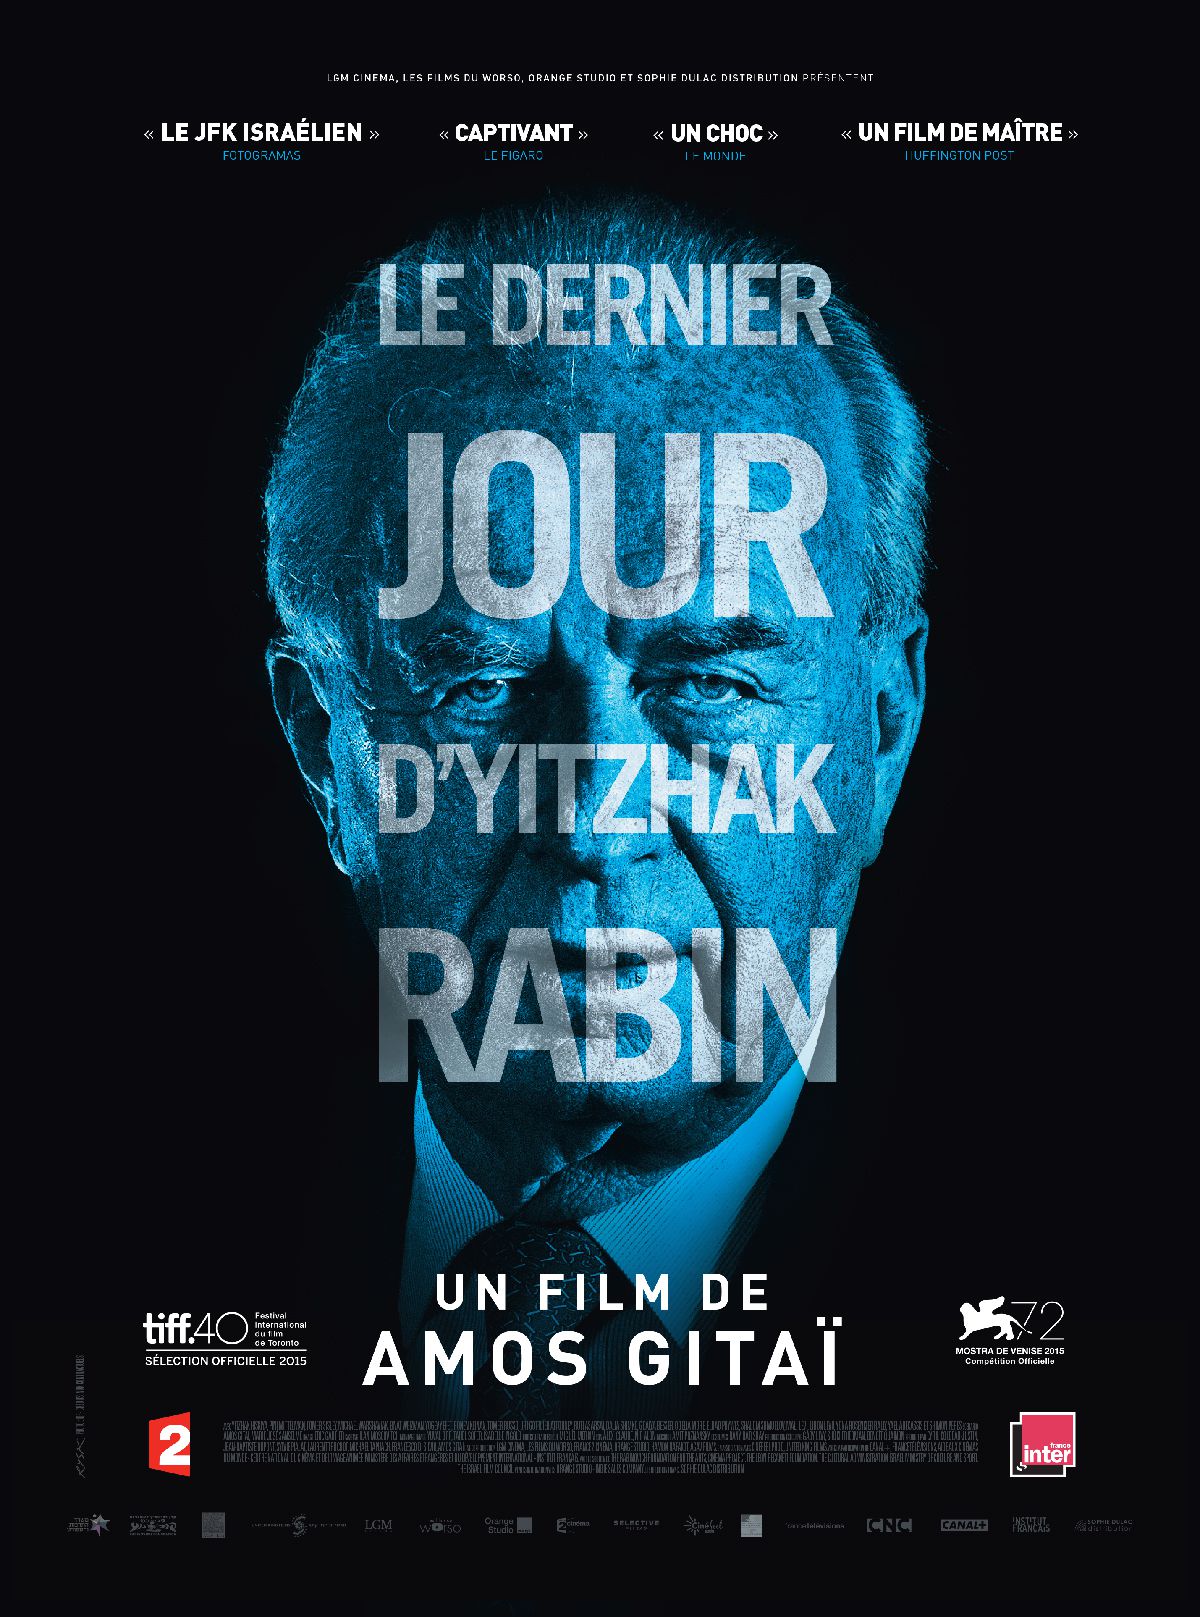 Le dernier jour d’Yitzhak Rabin - Film (2015) streaming VF gratuit complet